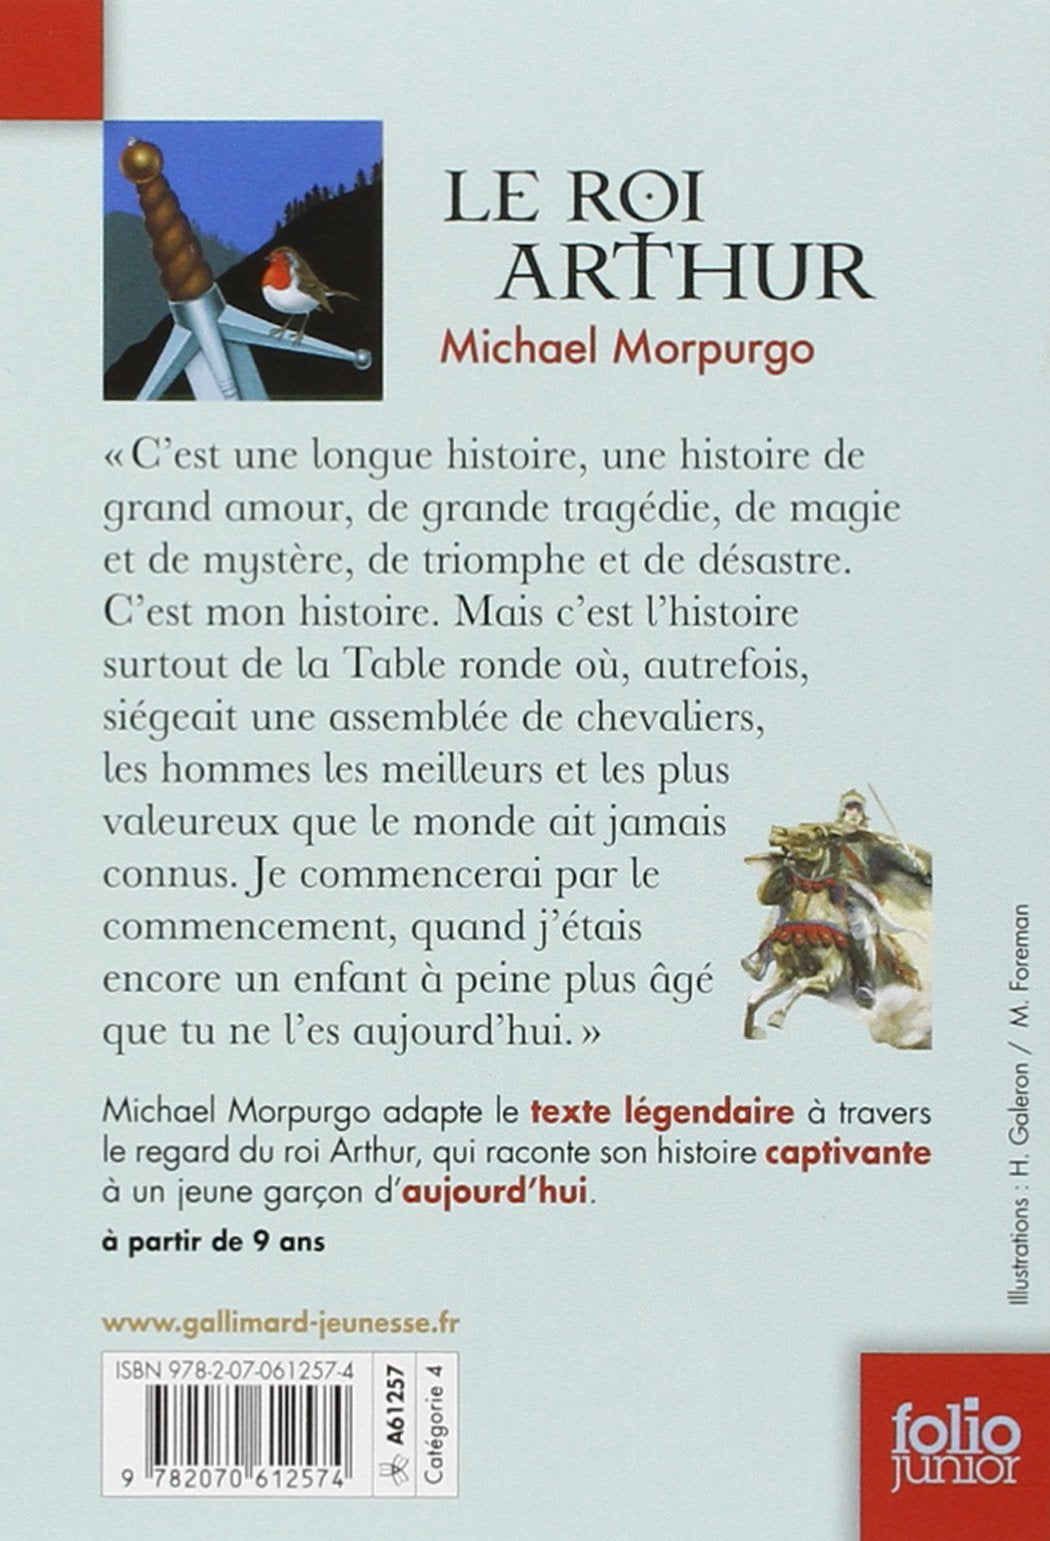 Le roi Arthur (Michael Morpurgo)